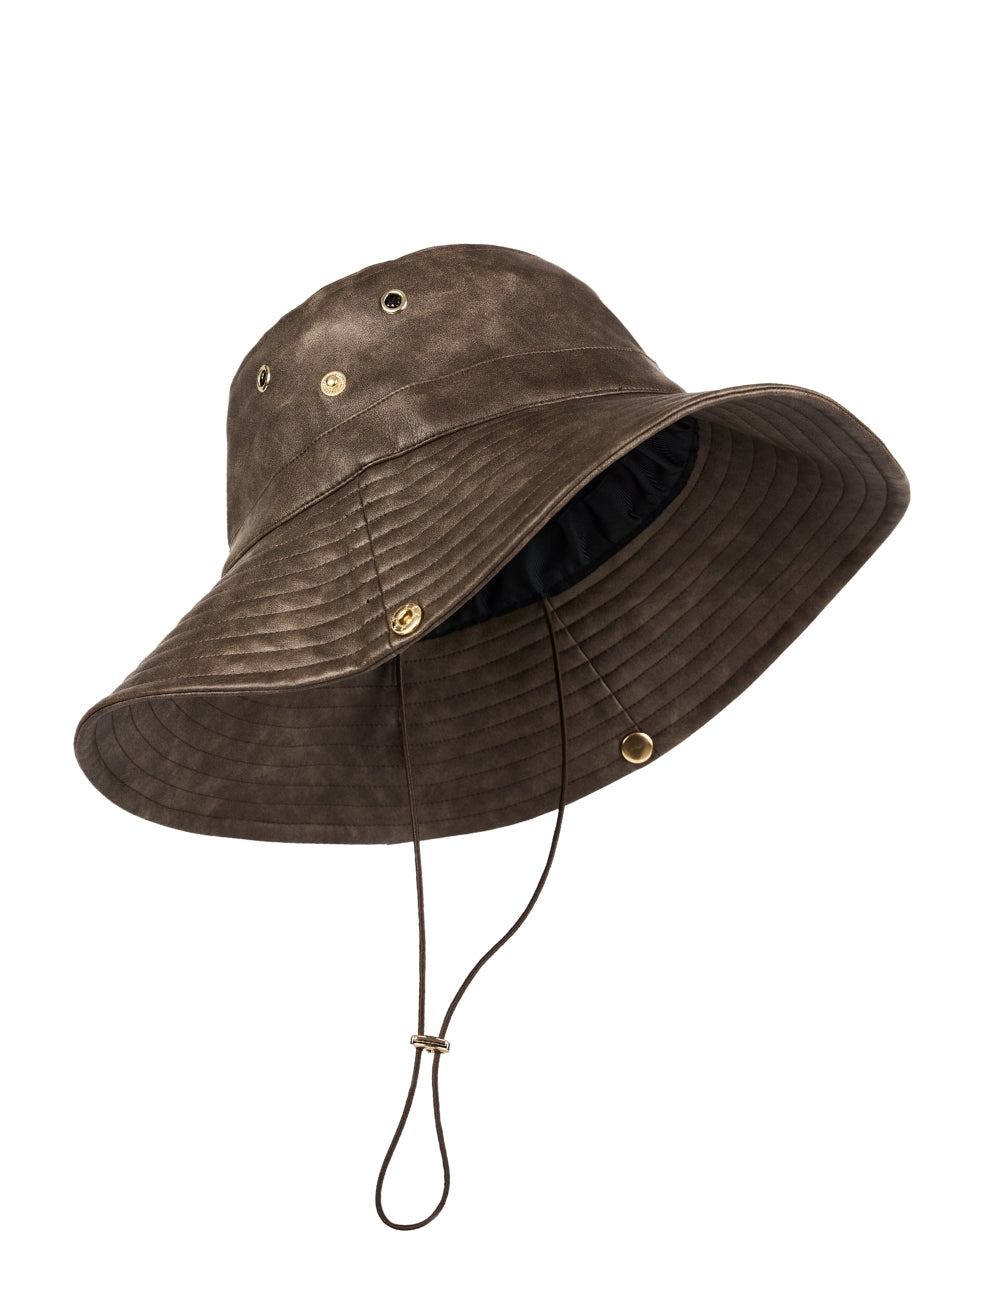 Fisherman's Hat Bucket Hat Made in Canada Luxury Accessories Vintage Brown Vegan Leather